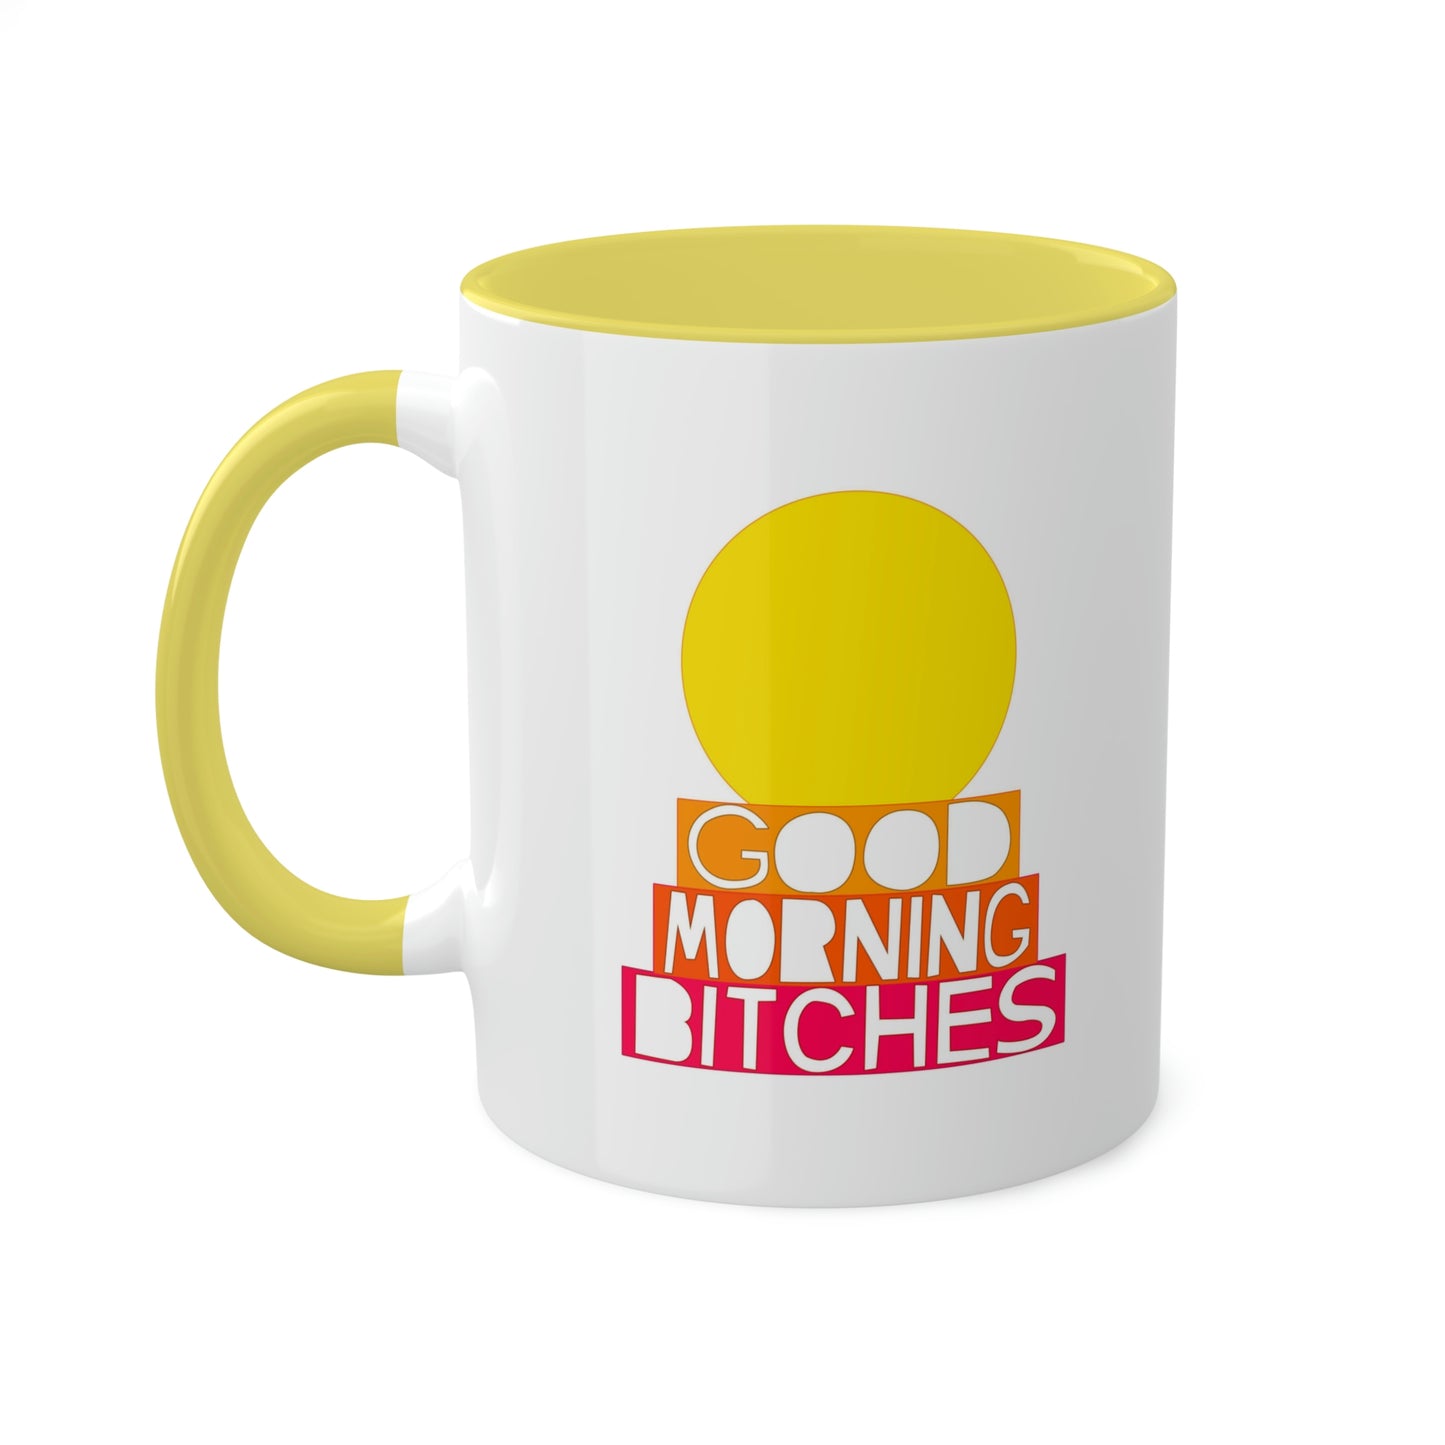 Good Morning Bitches Mug